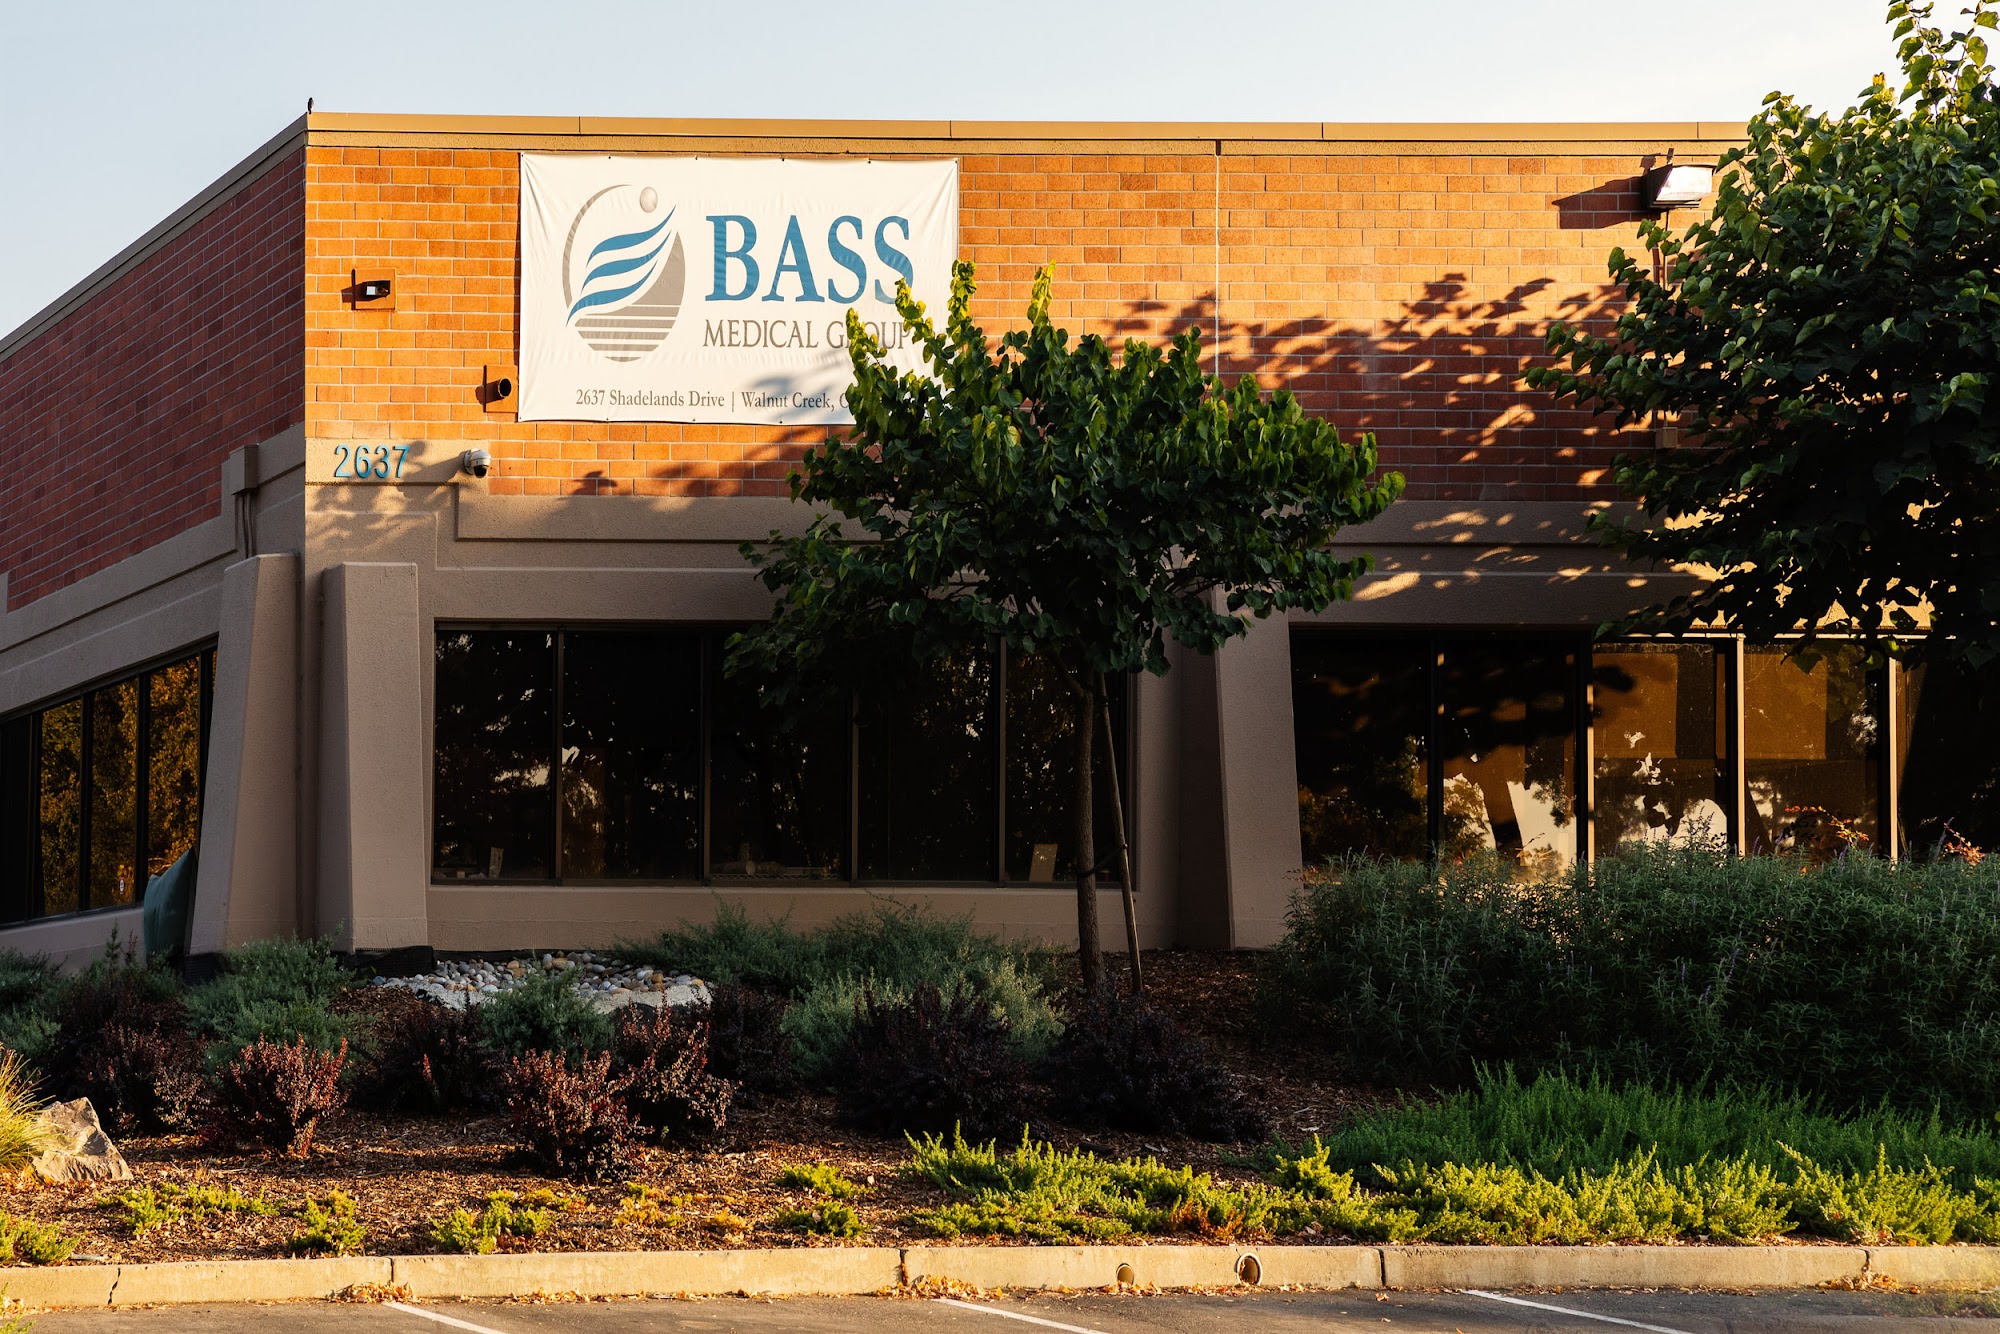 BASS Medical Group